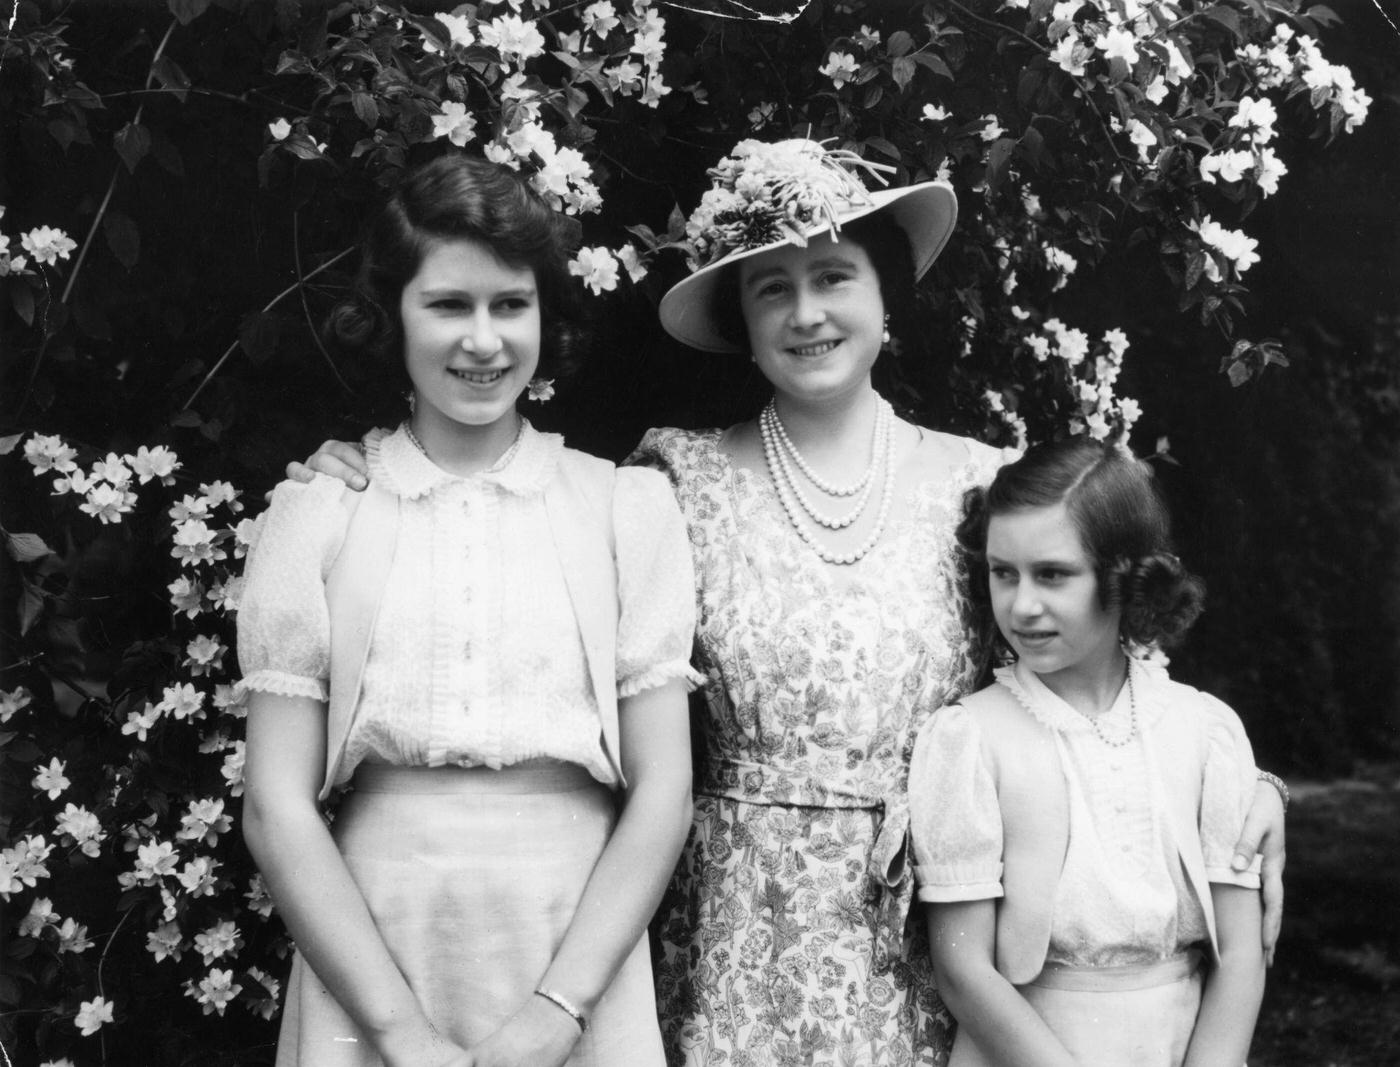 Queen Elizabeth with her daughter Princess Elizabeth (later Queen Elizabeth II) and Princess Margaret in the garden at Windsor Castle during WW II.